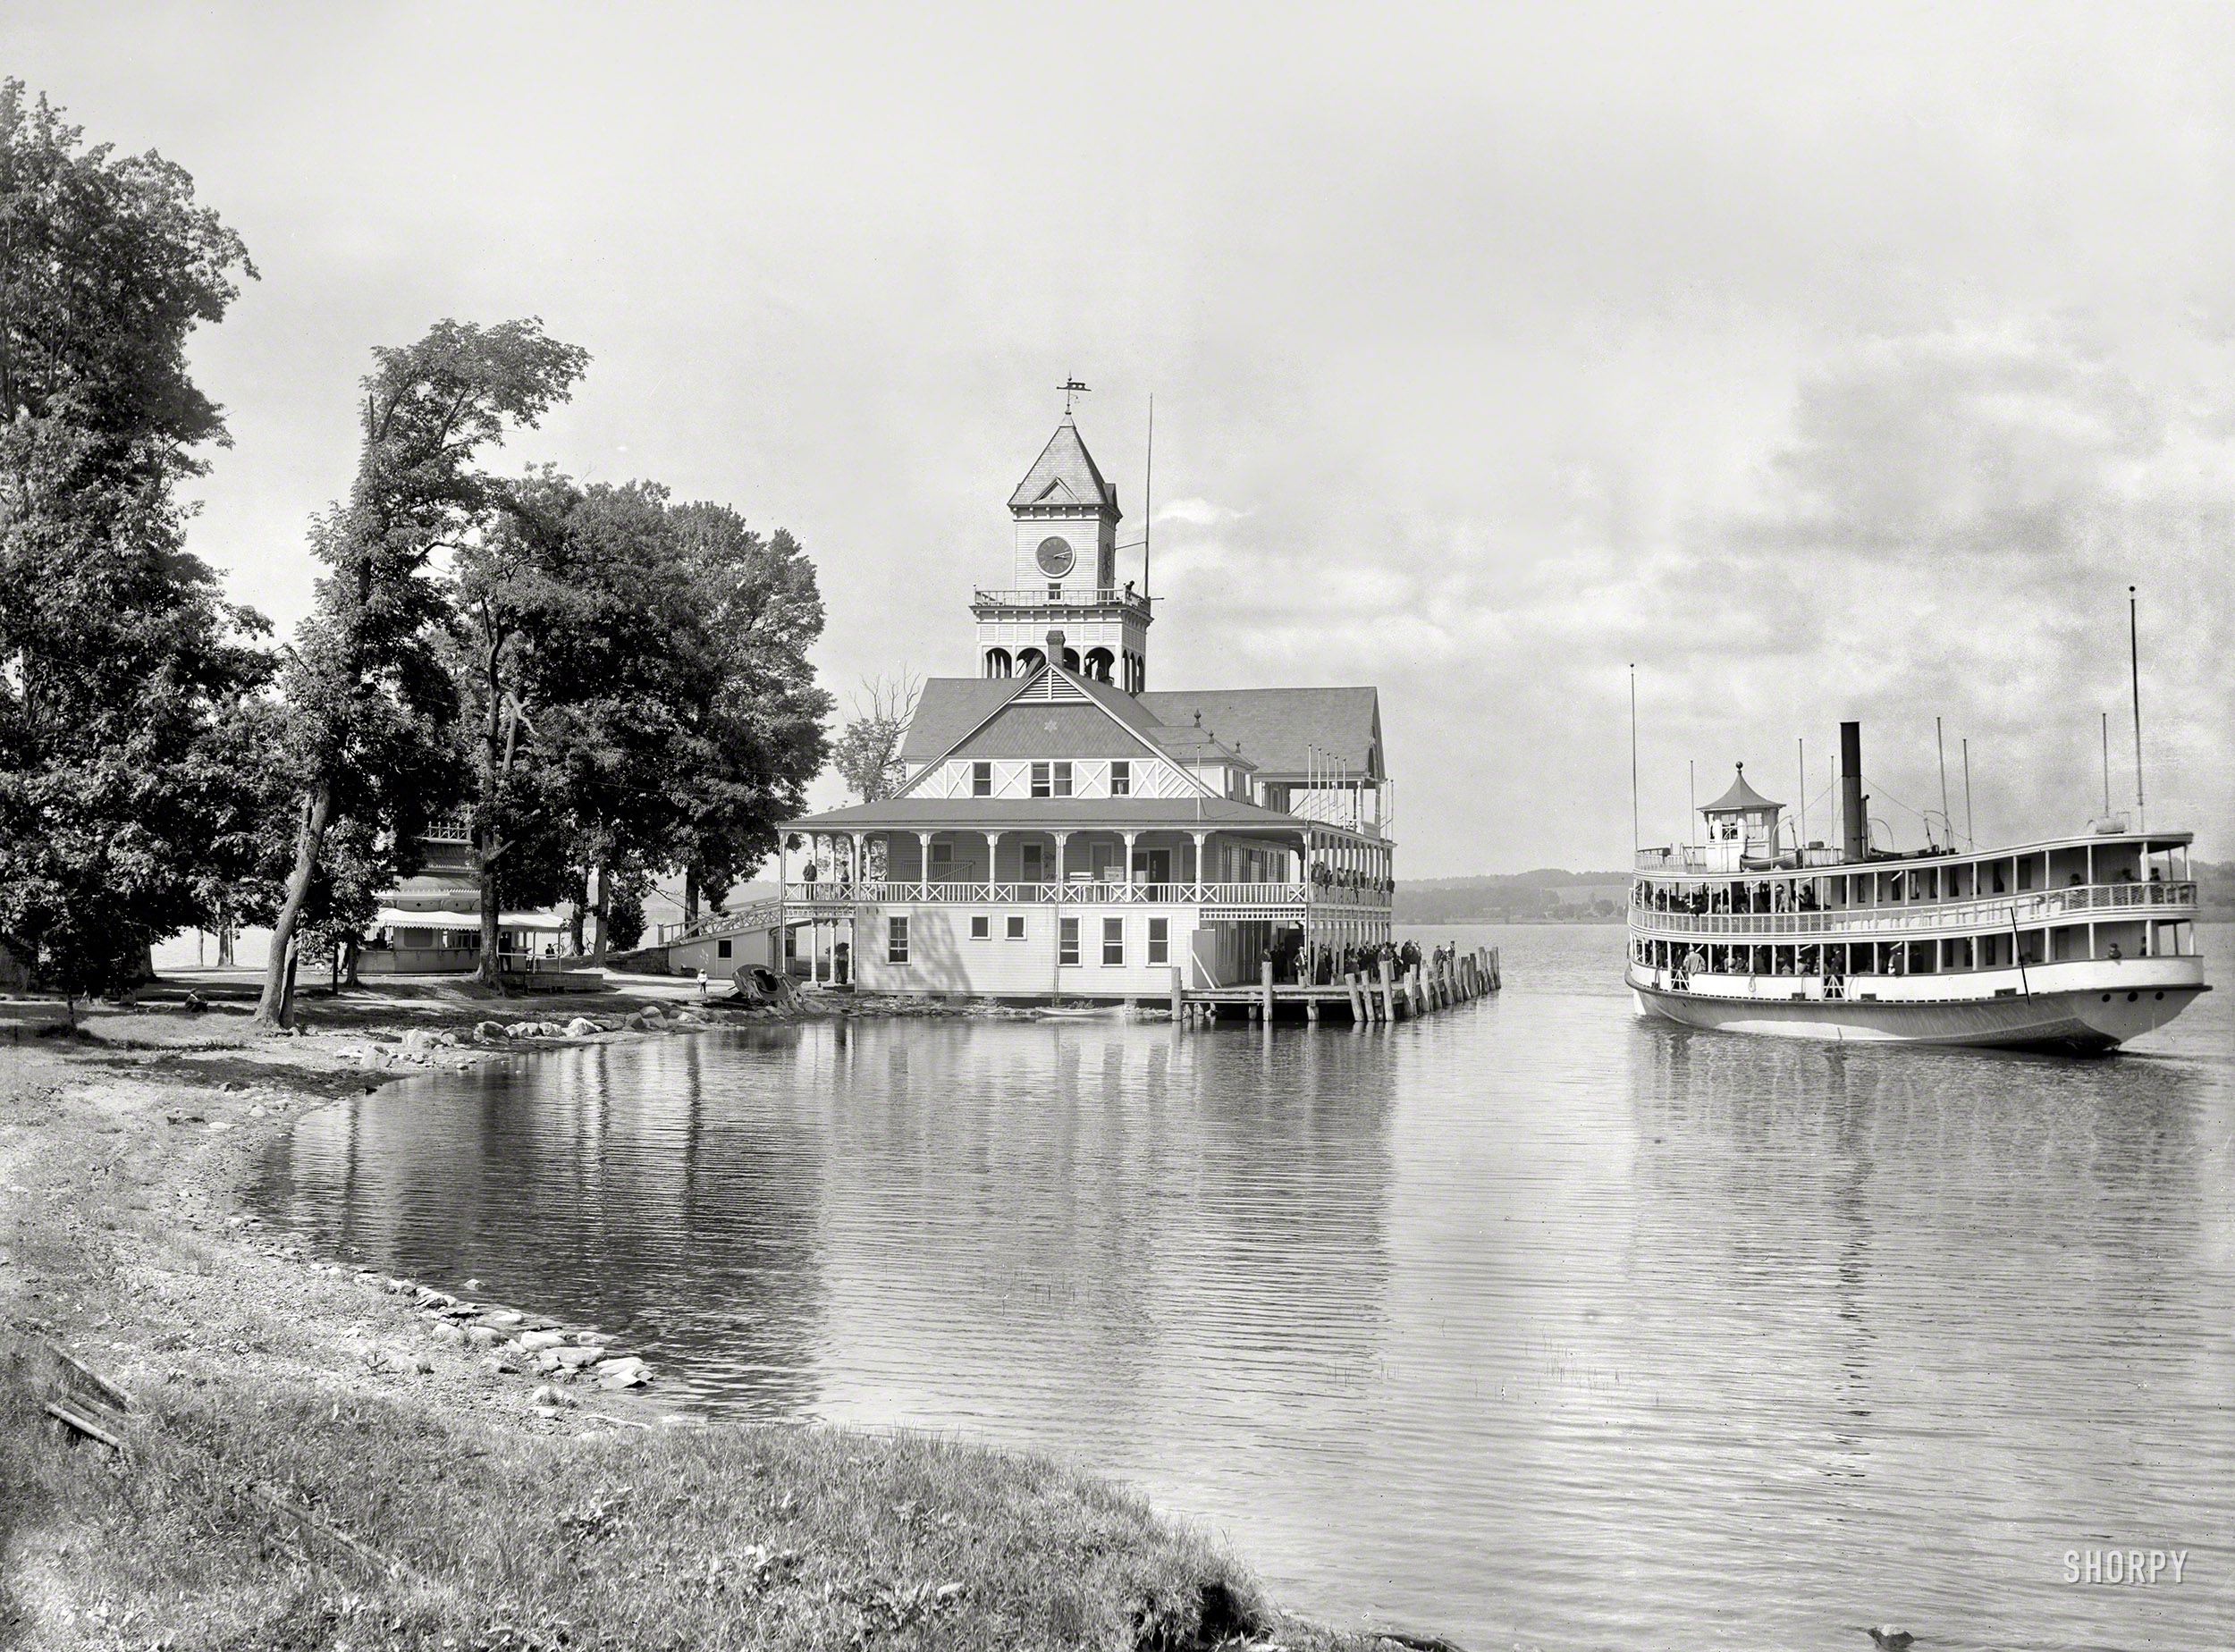 Chautauqua County, New York, circa 1899. "Steamer landing, Lake Chautauqua." 8x10 inch dry plate glass negative, Detroit Publishing Company. View full size.